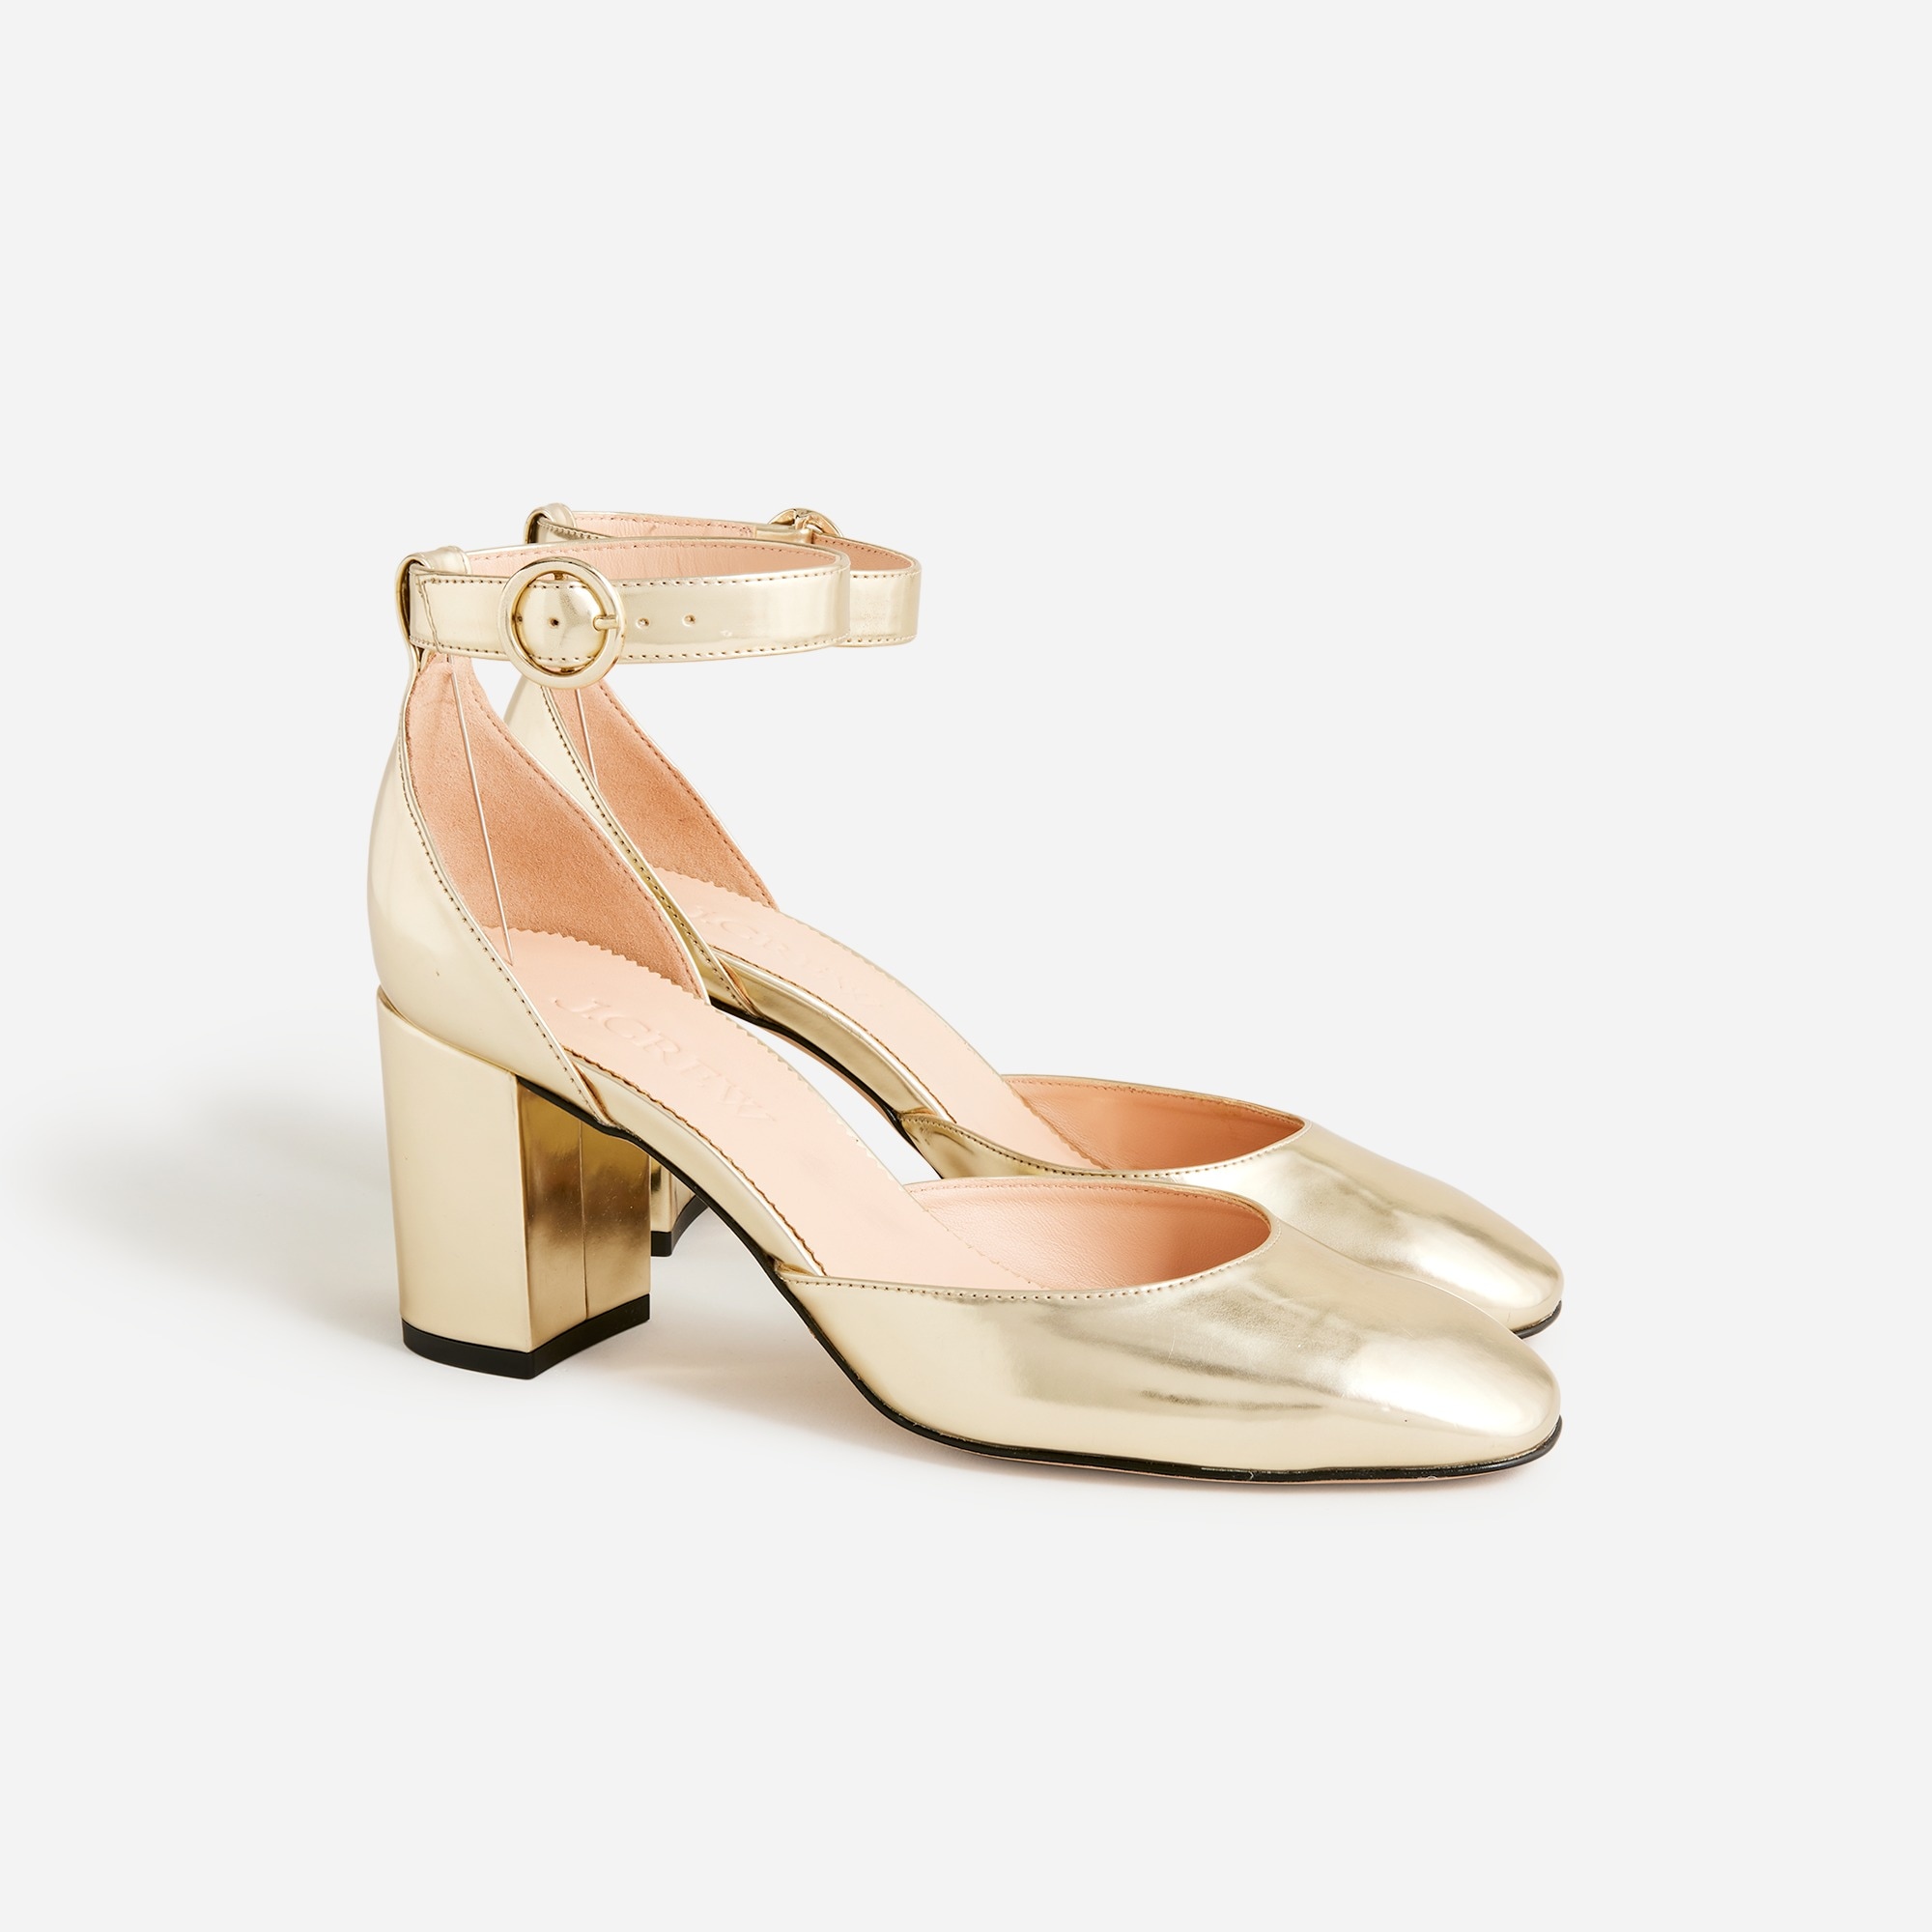  Maisie ankle-strap heels in metallic